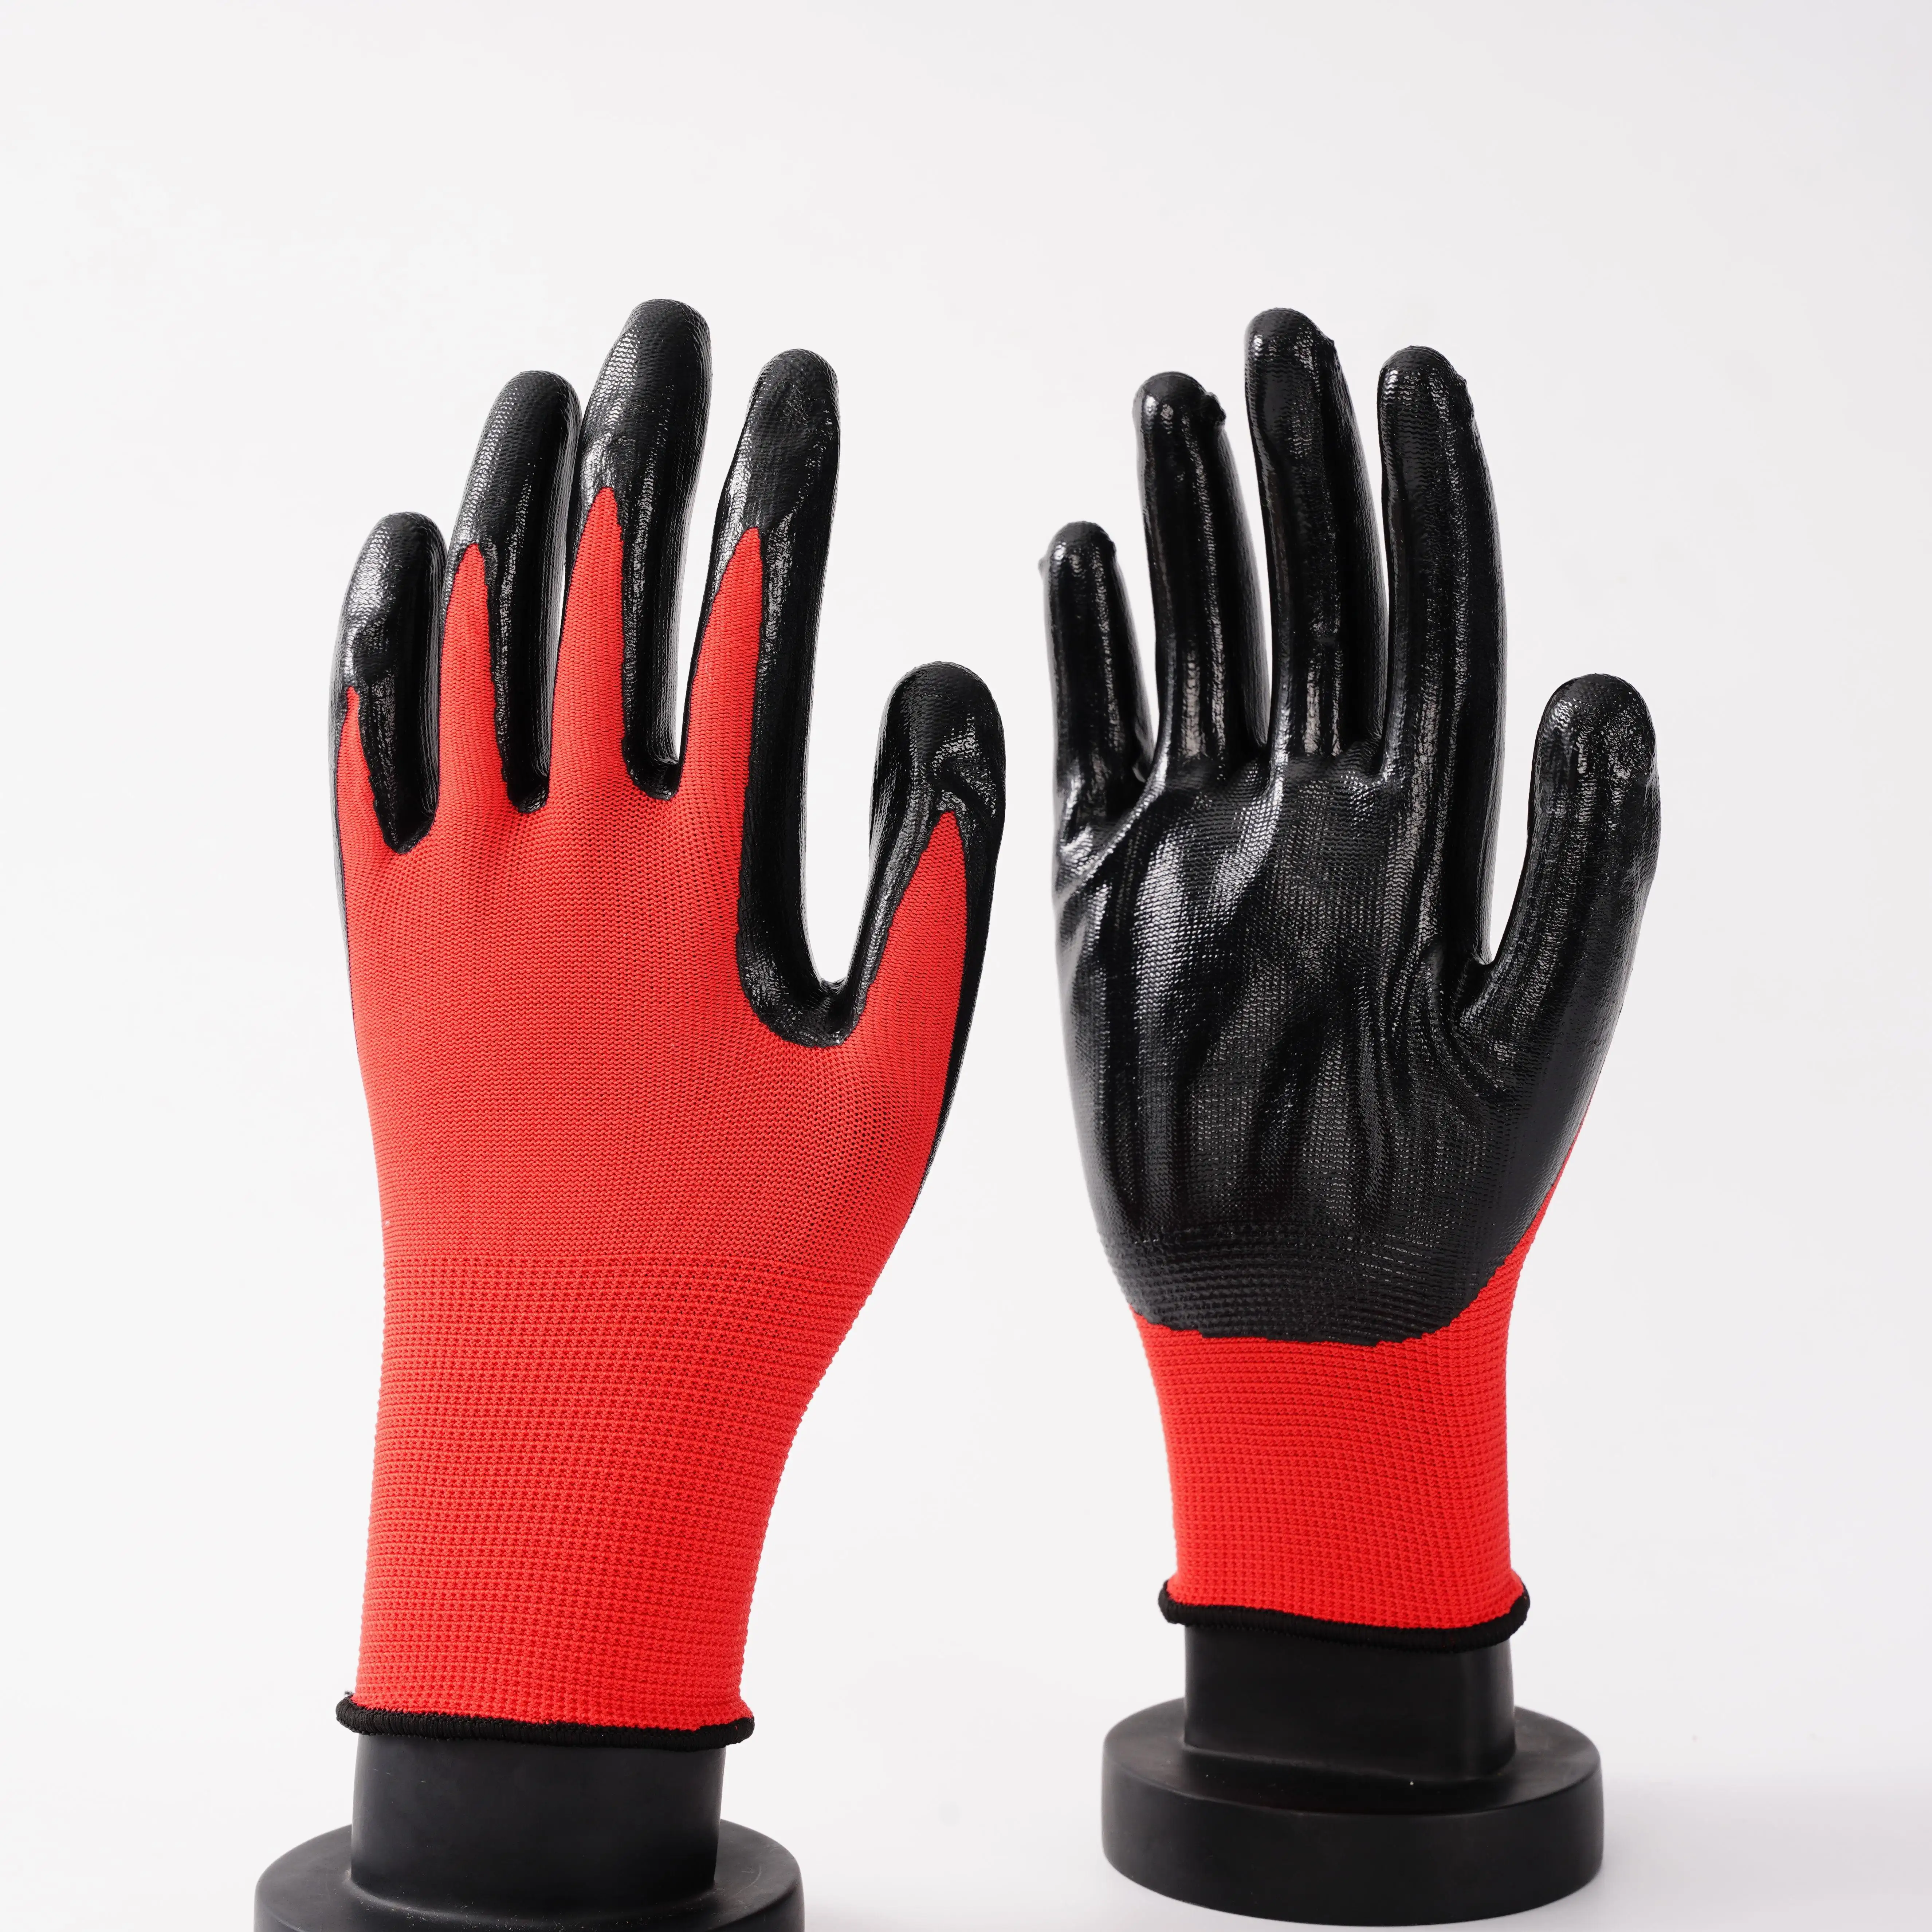 Görev nitril eldiven, lite ve sert, glov nitril eldiven endüstriyel güvenlik el koruyucu nitril eldiven